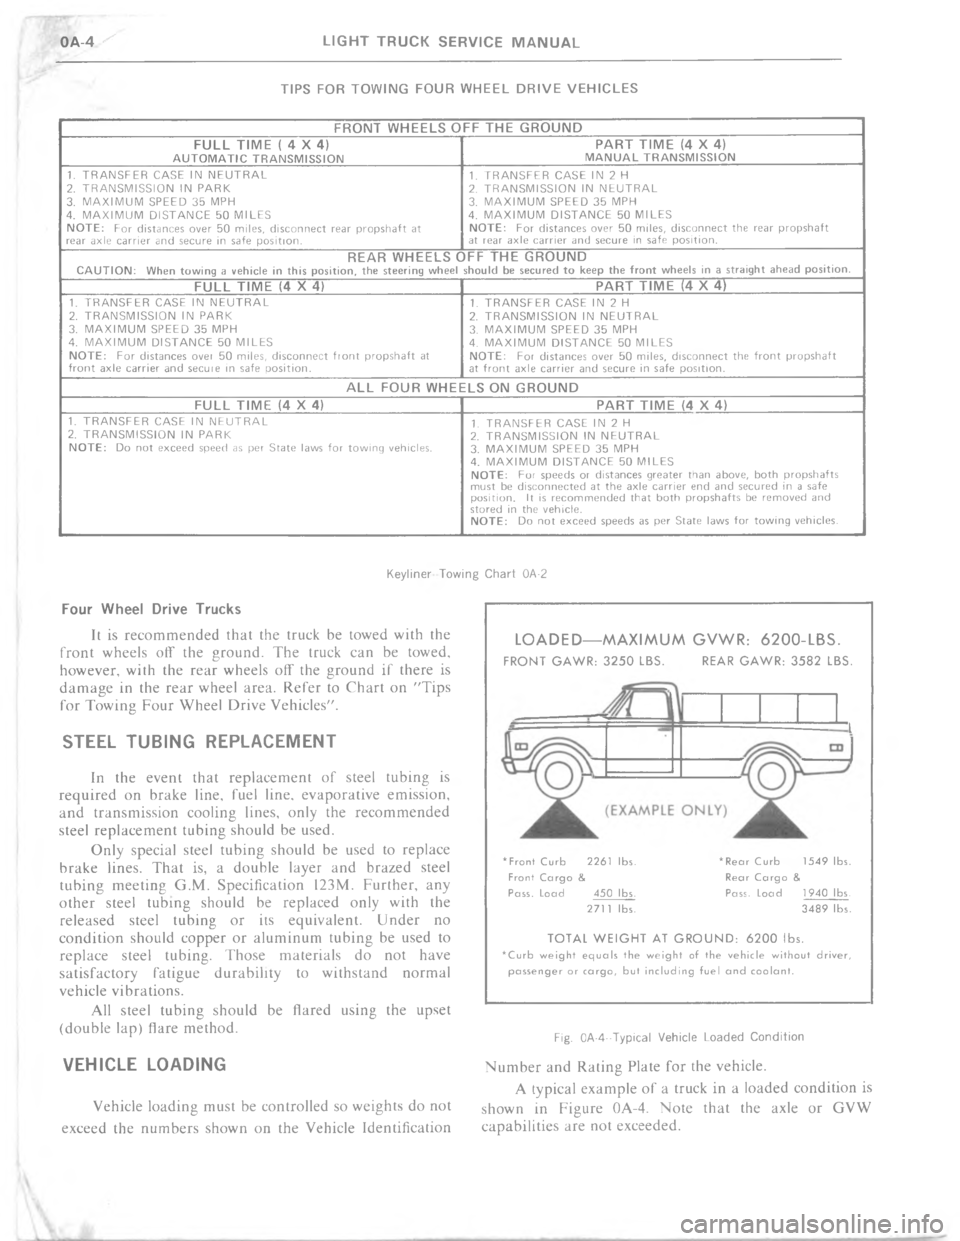 CHEVROLET LIGHT DUTY TRUCK 1977  Service Manual 	!  	7  7     
	 7  	    
 	 2H2
-!
&
"
E
G
=
38
"
E
G
=
3



!
"
E
G
=
38
"
E
G
=
38



"
E
3"
E
G
=
38


